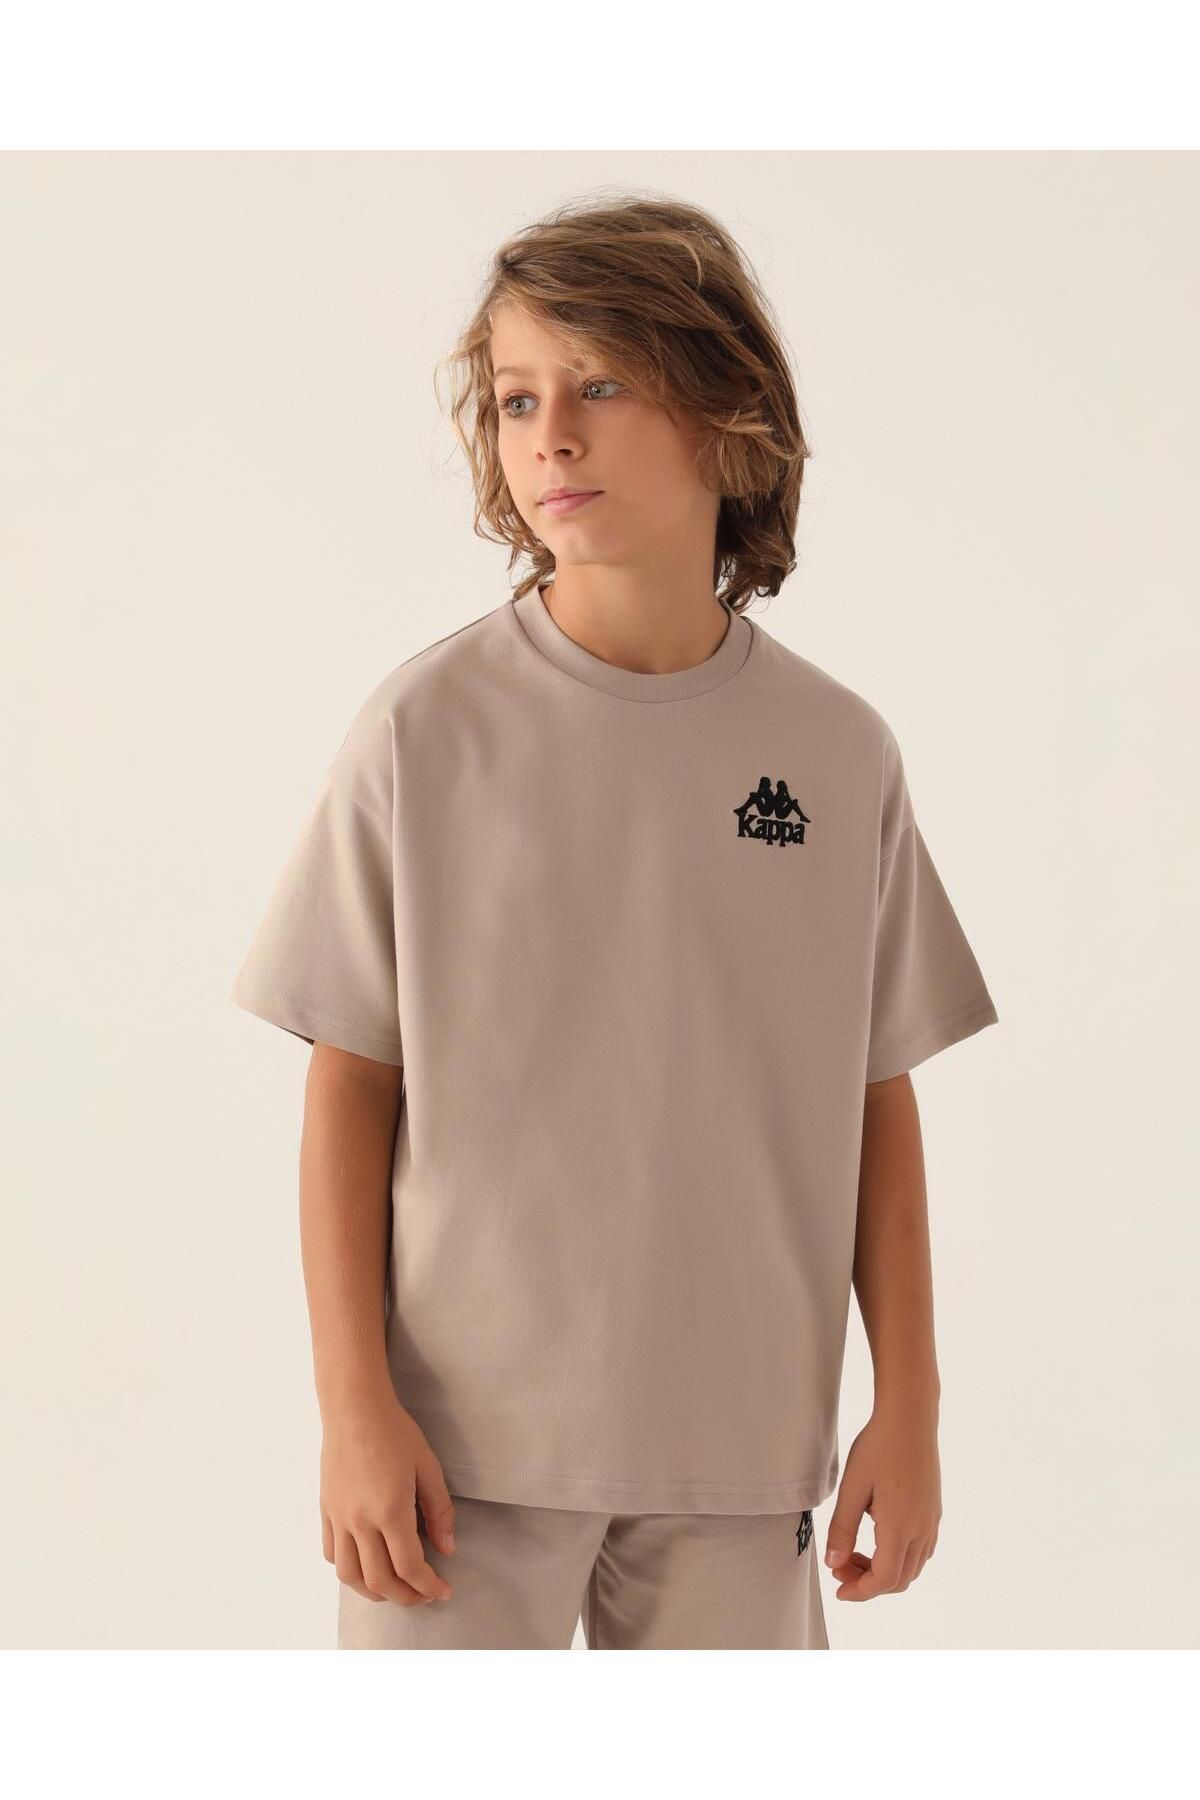 Kappa Authentic Caden Erkek Çocuk Bej Regular Fit Tişört